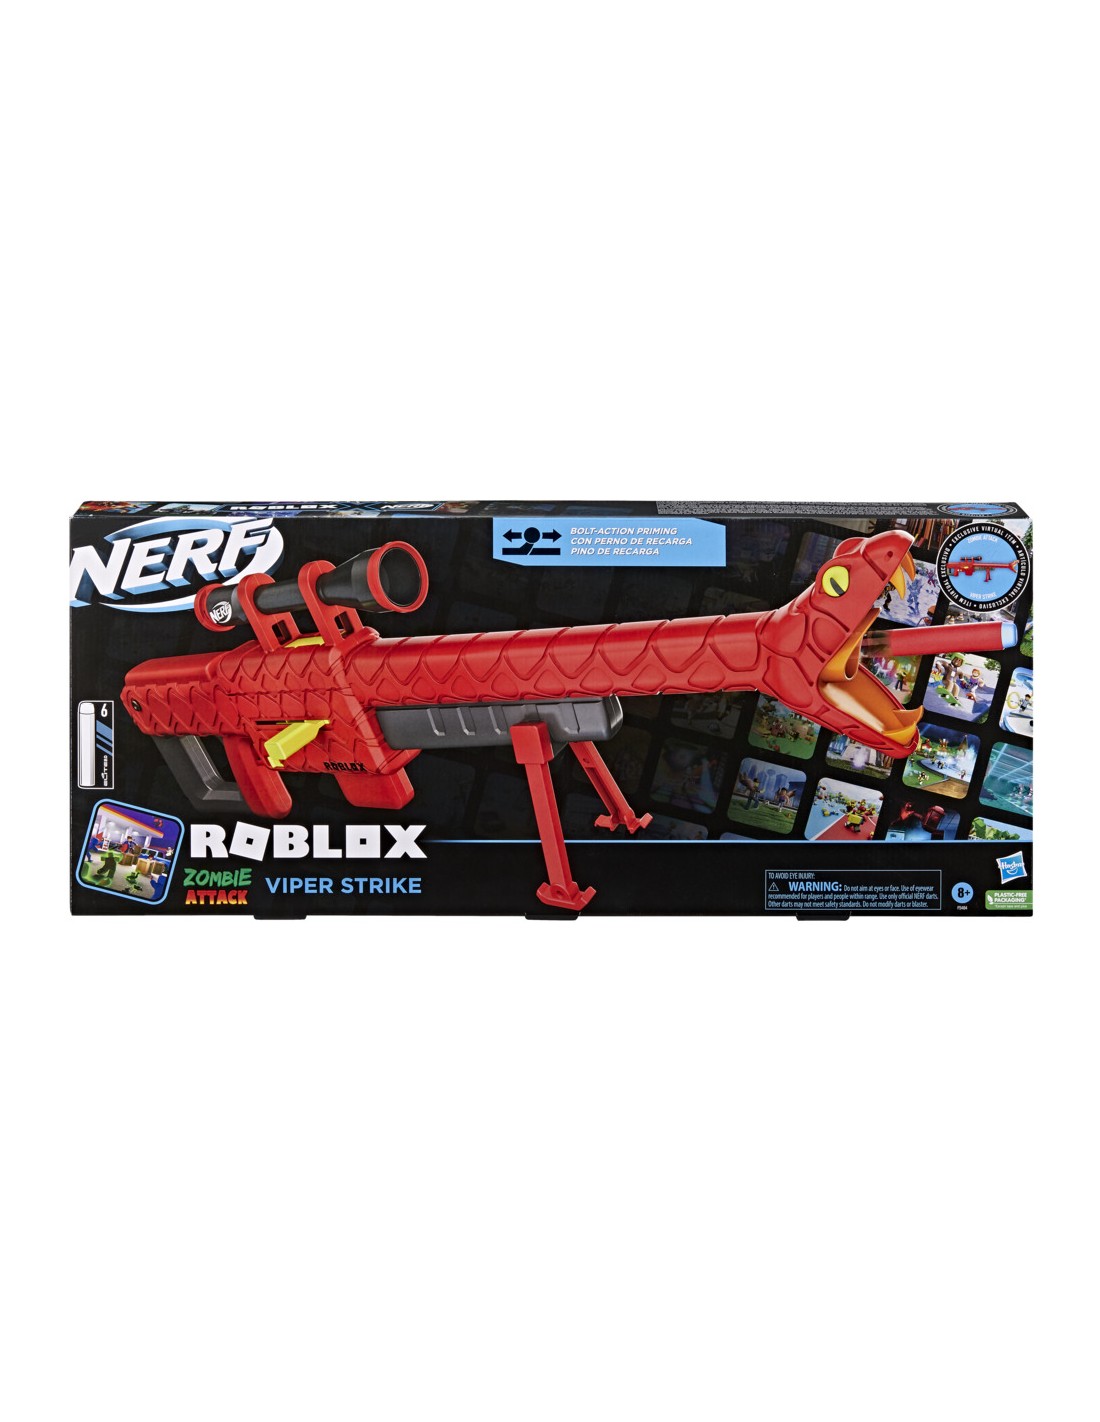 Nerf Roblox Cobra Viper Strike